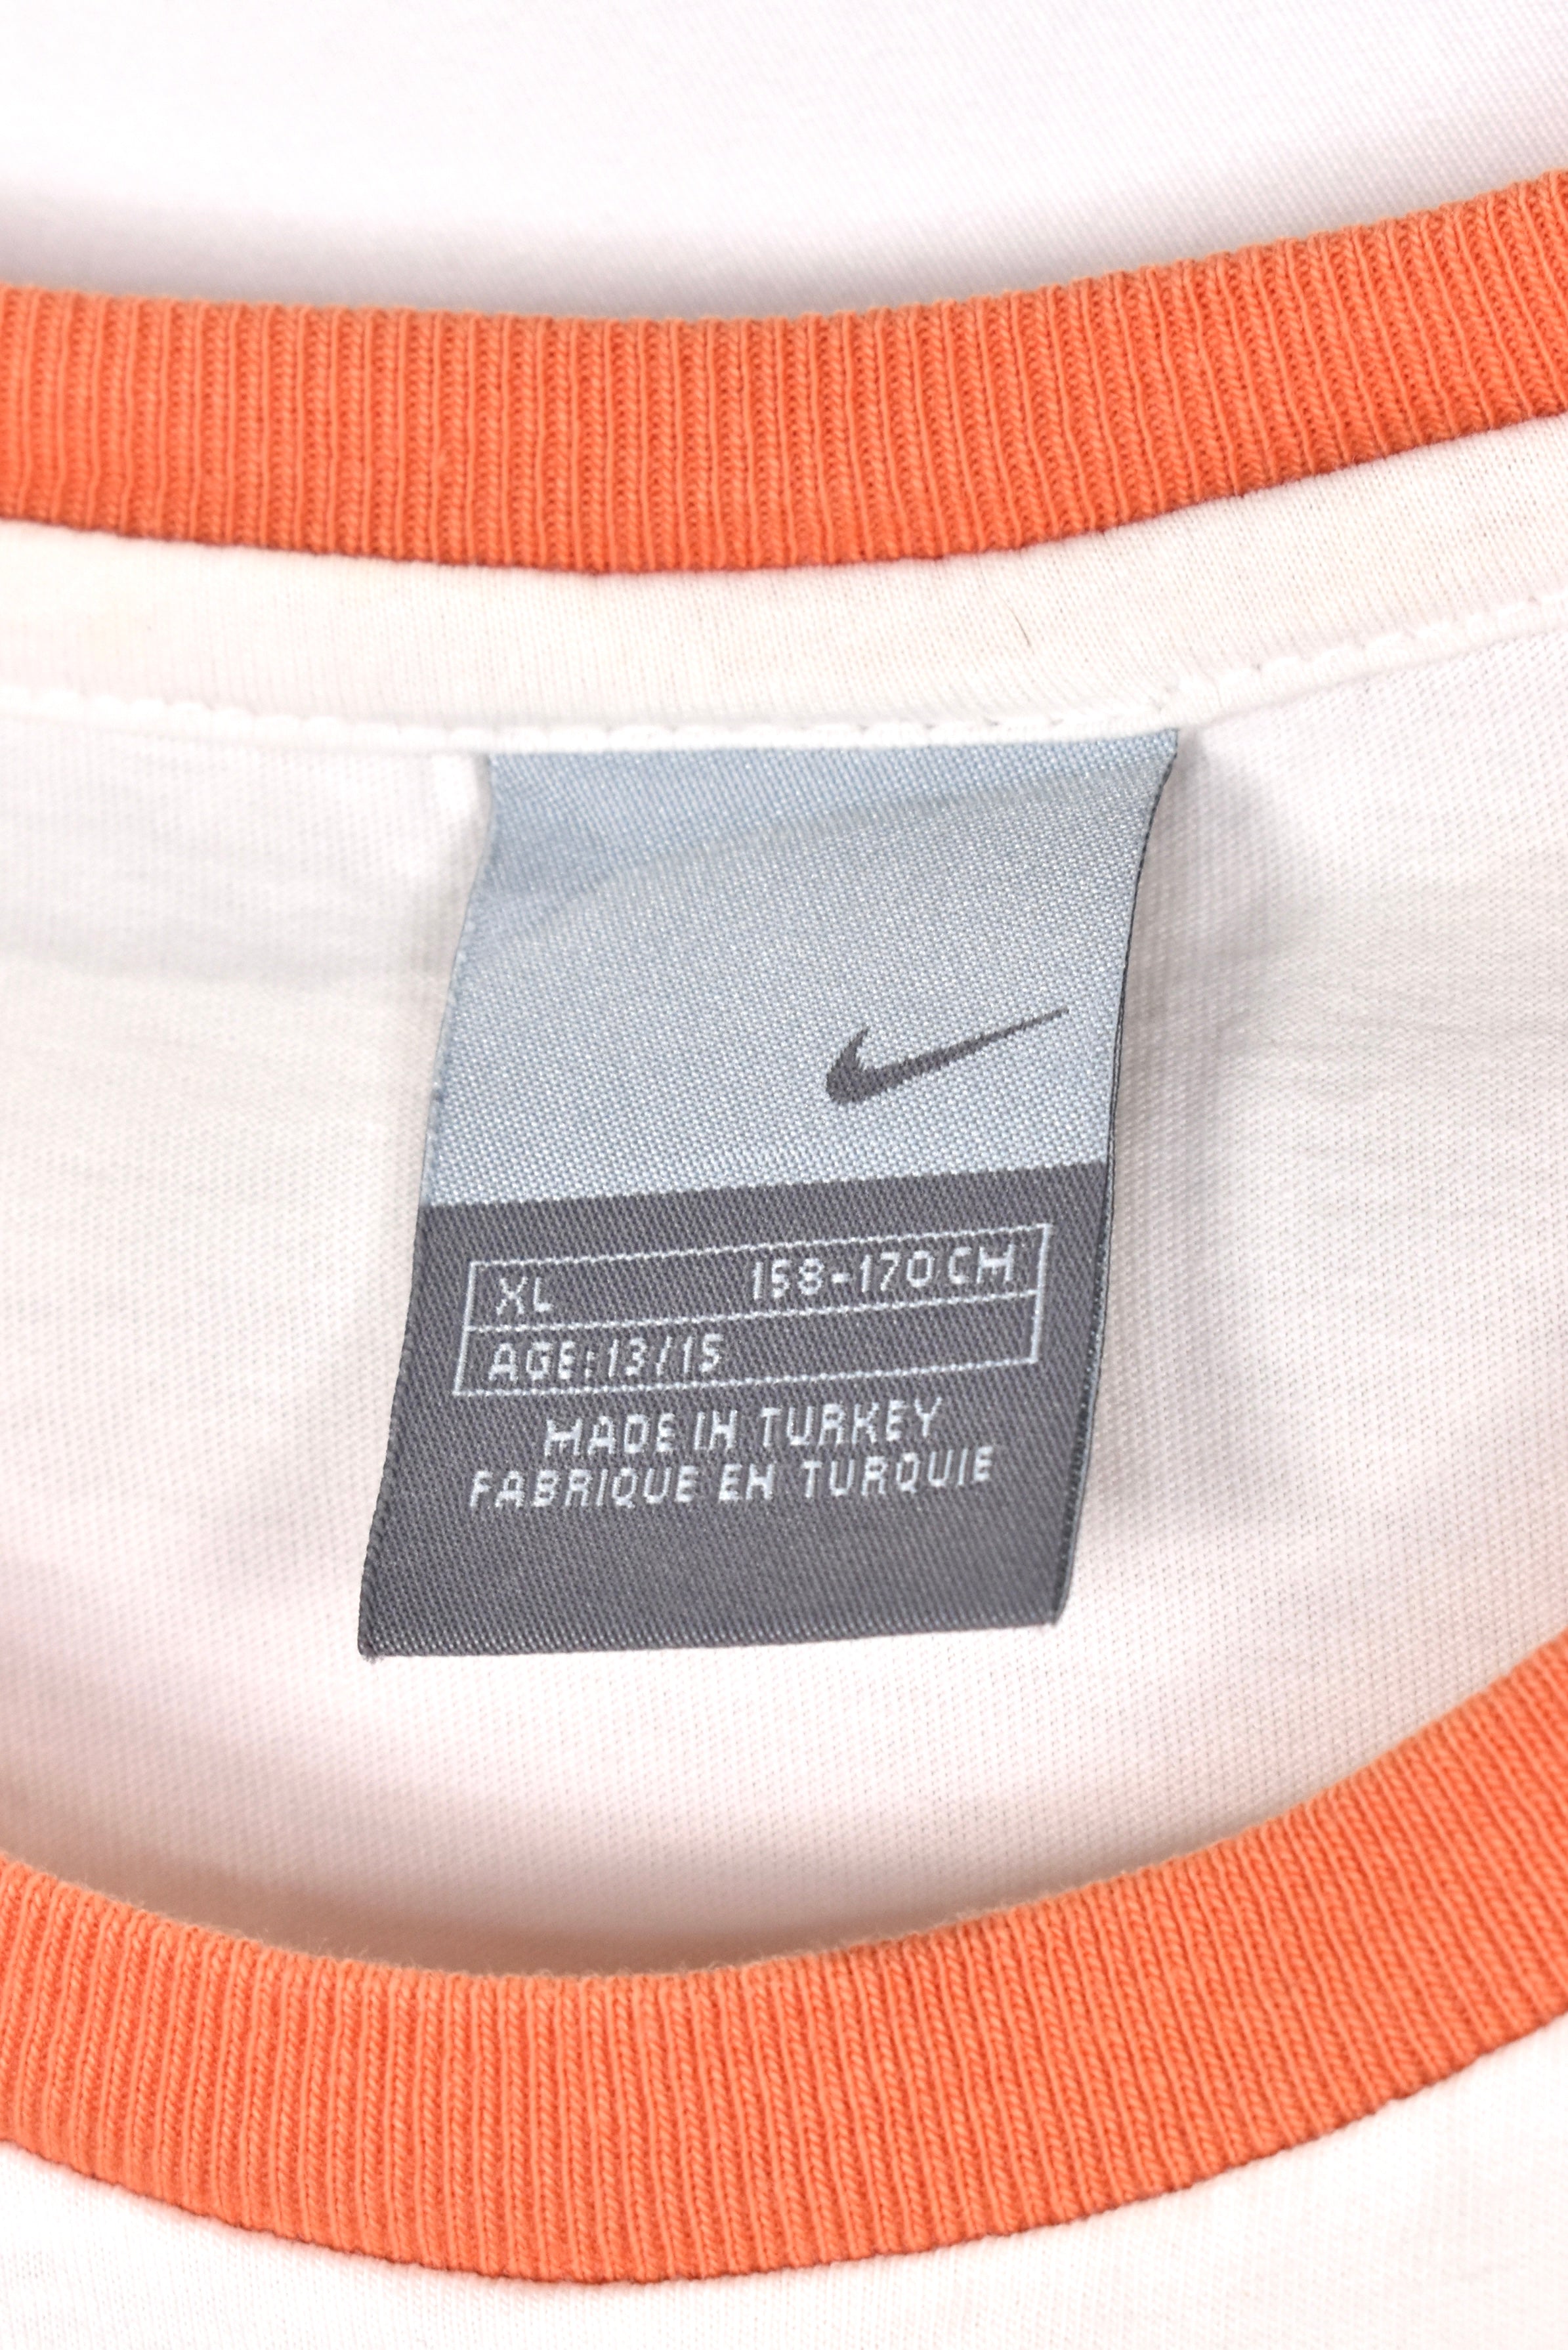 Vintage Nike shirt, white graphic tee - AU Small NIKE